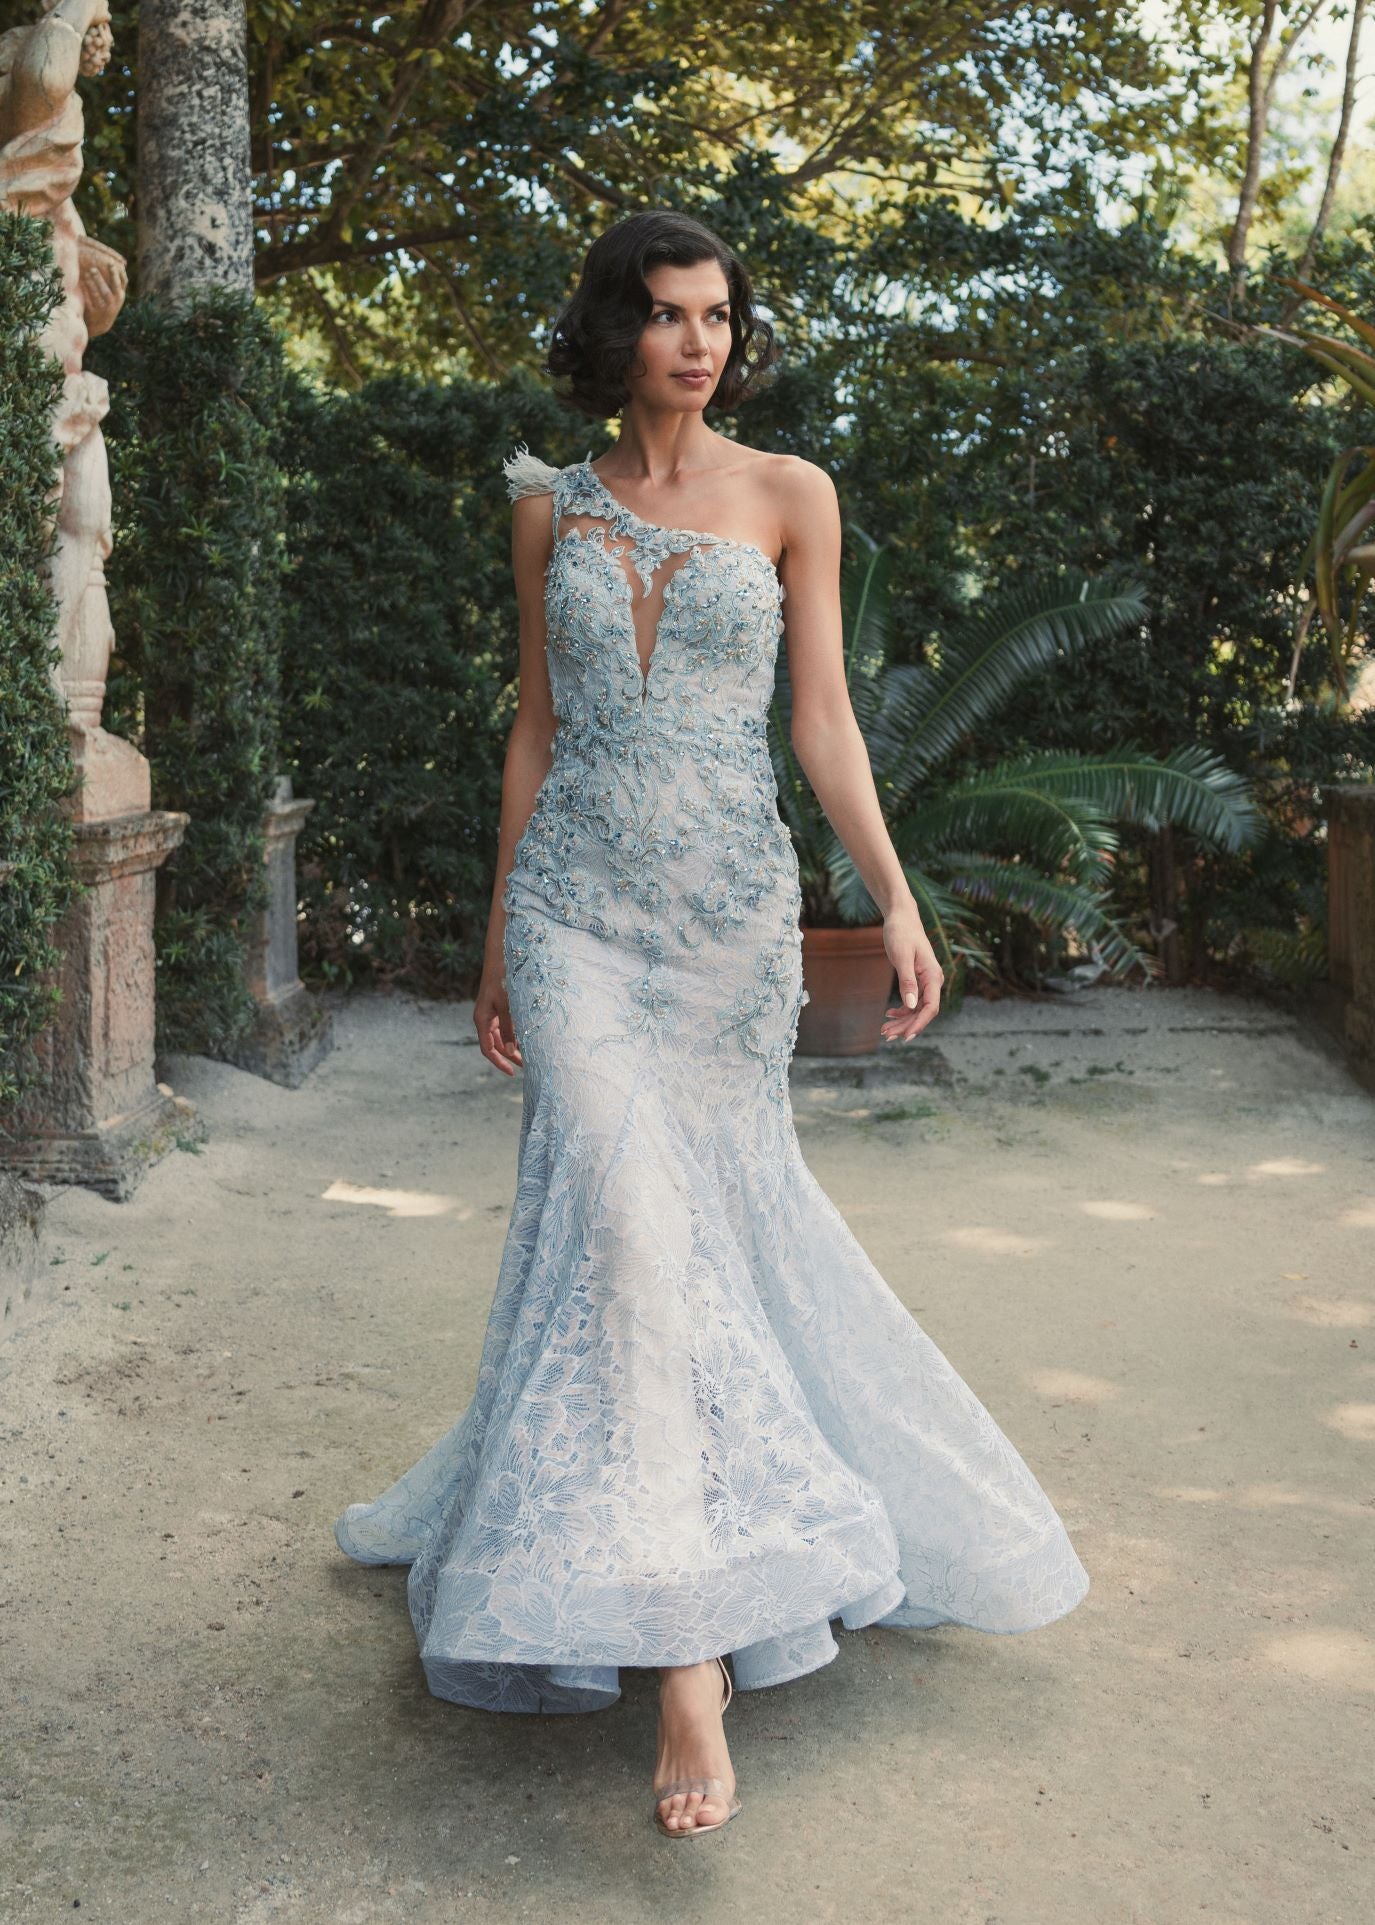 One Shoulder light blue dress with floral lace and embellishment details